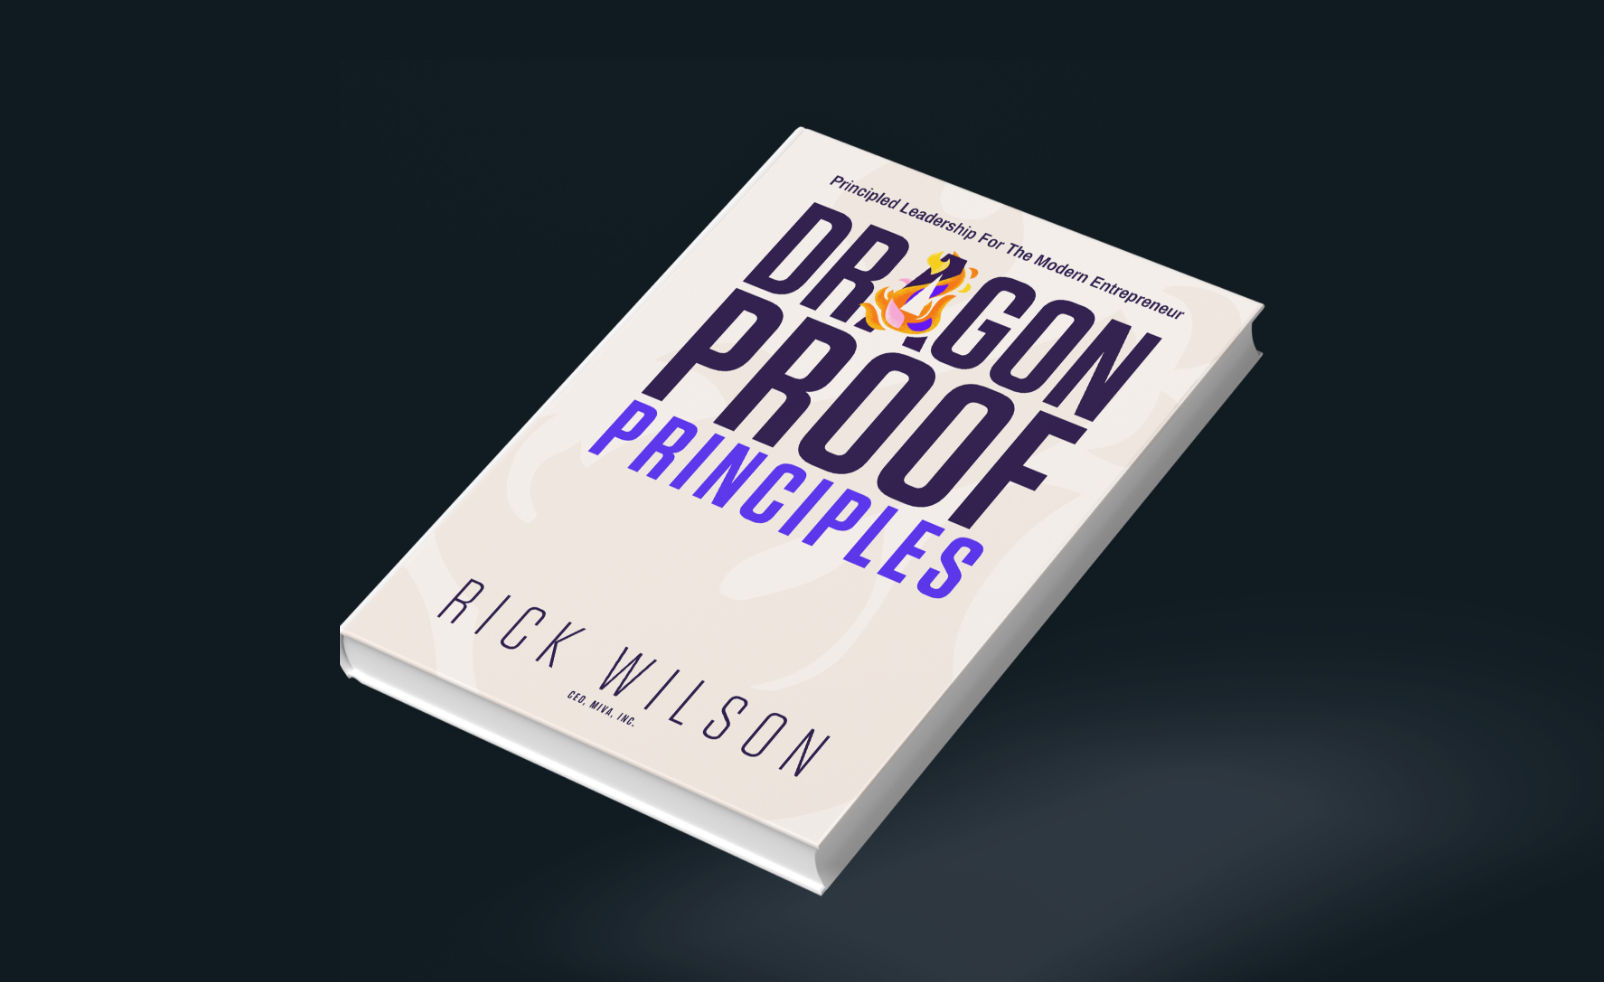 Dragonproof Principles book cover